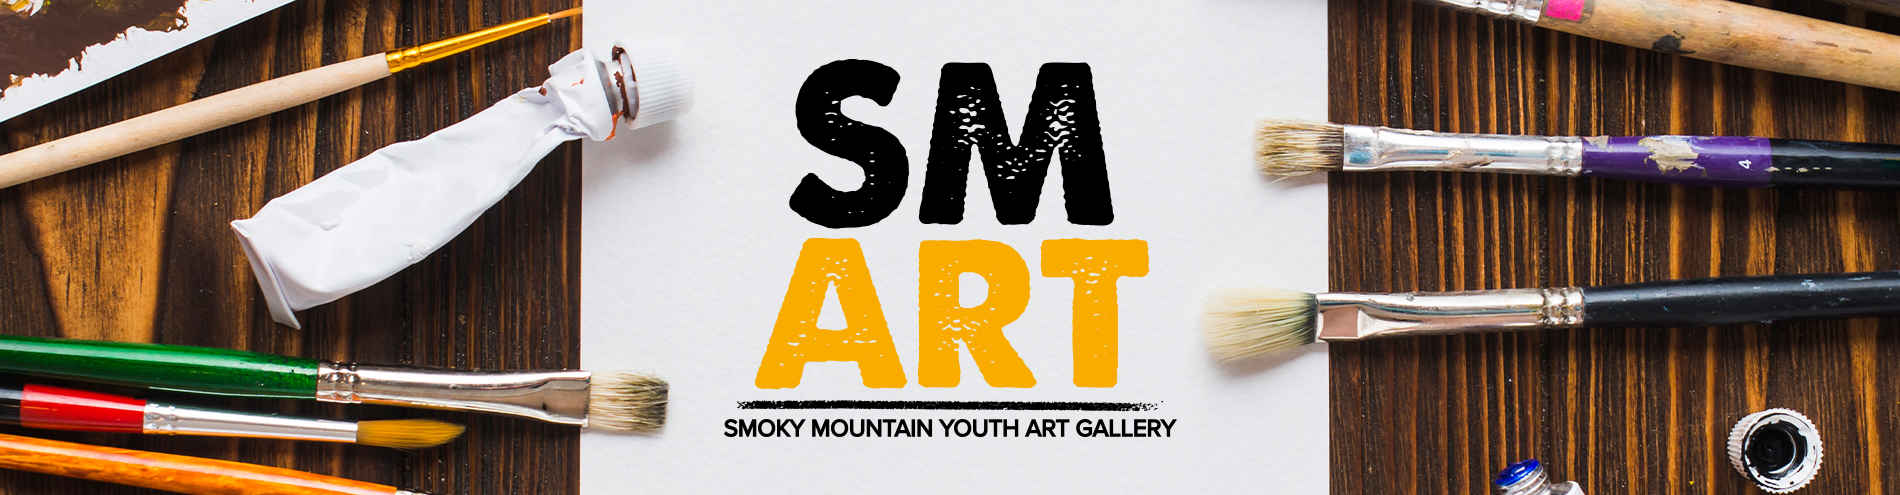 Smoky Mountain Youth Art Gallery Header